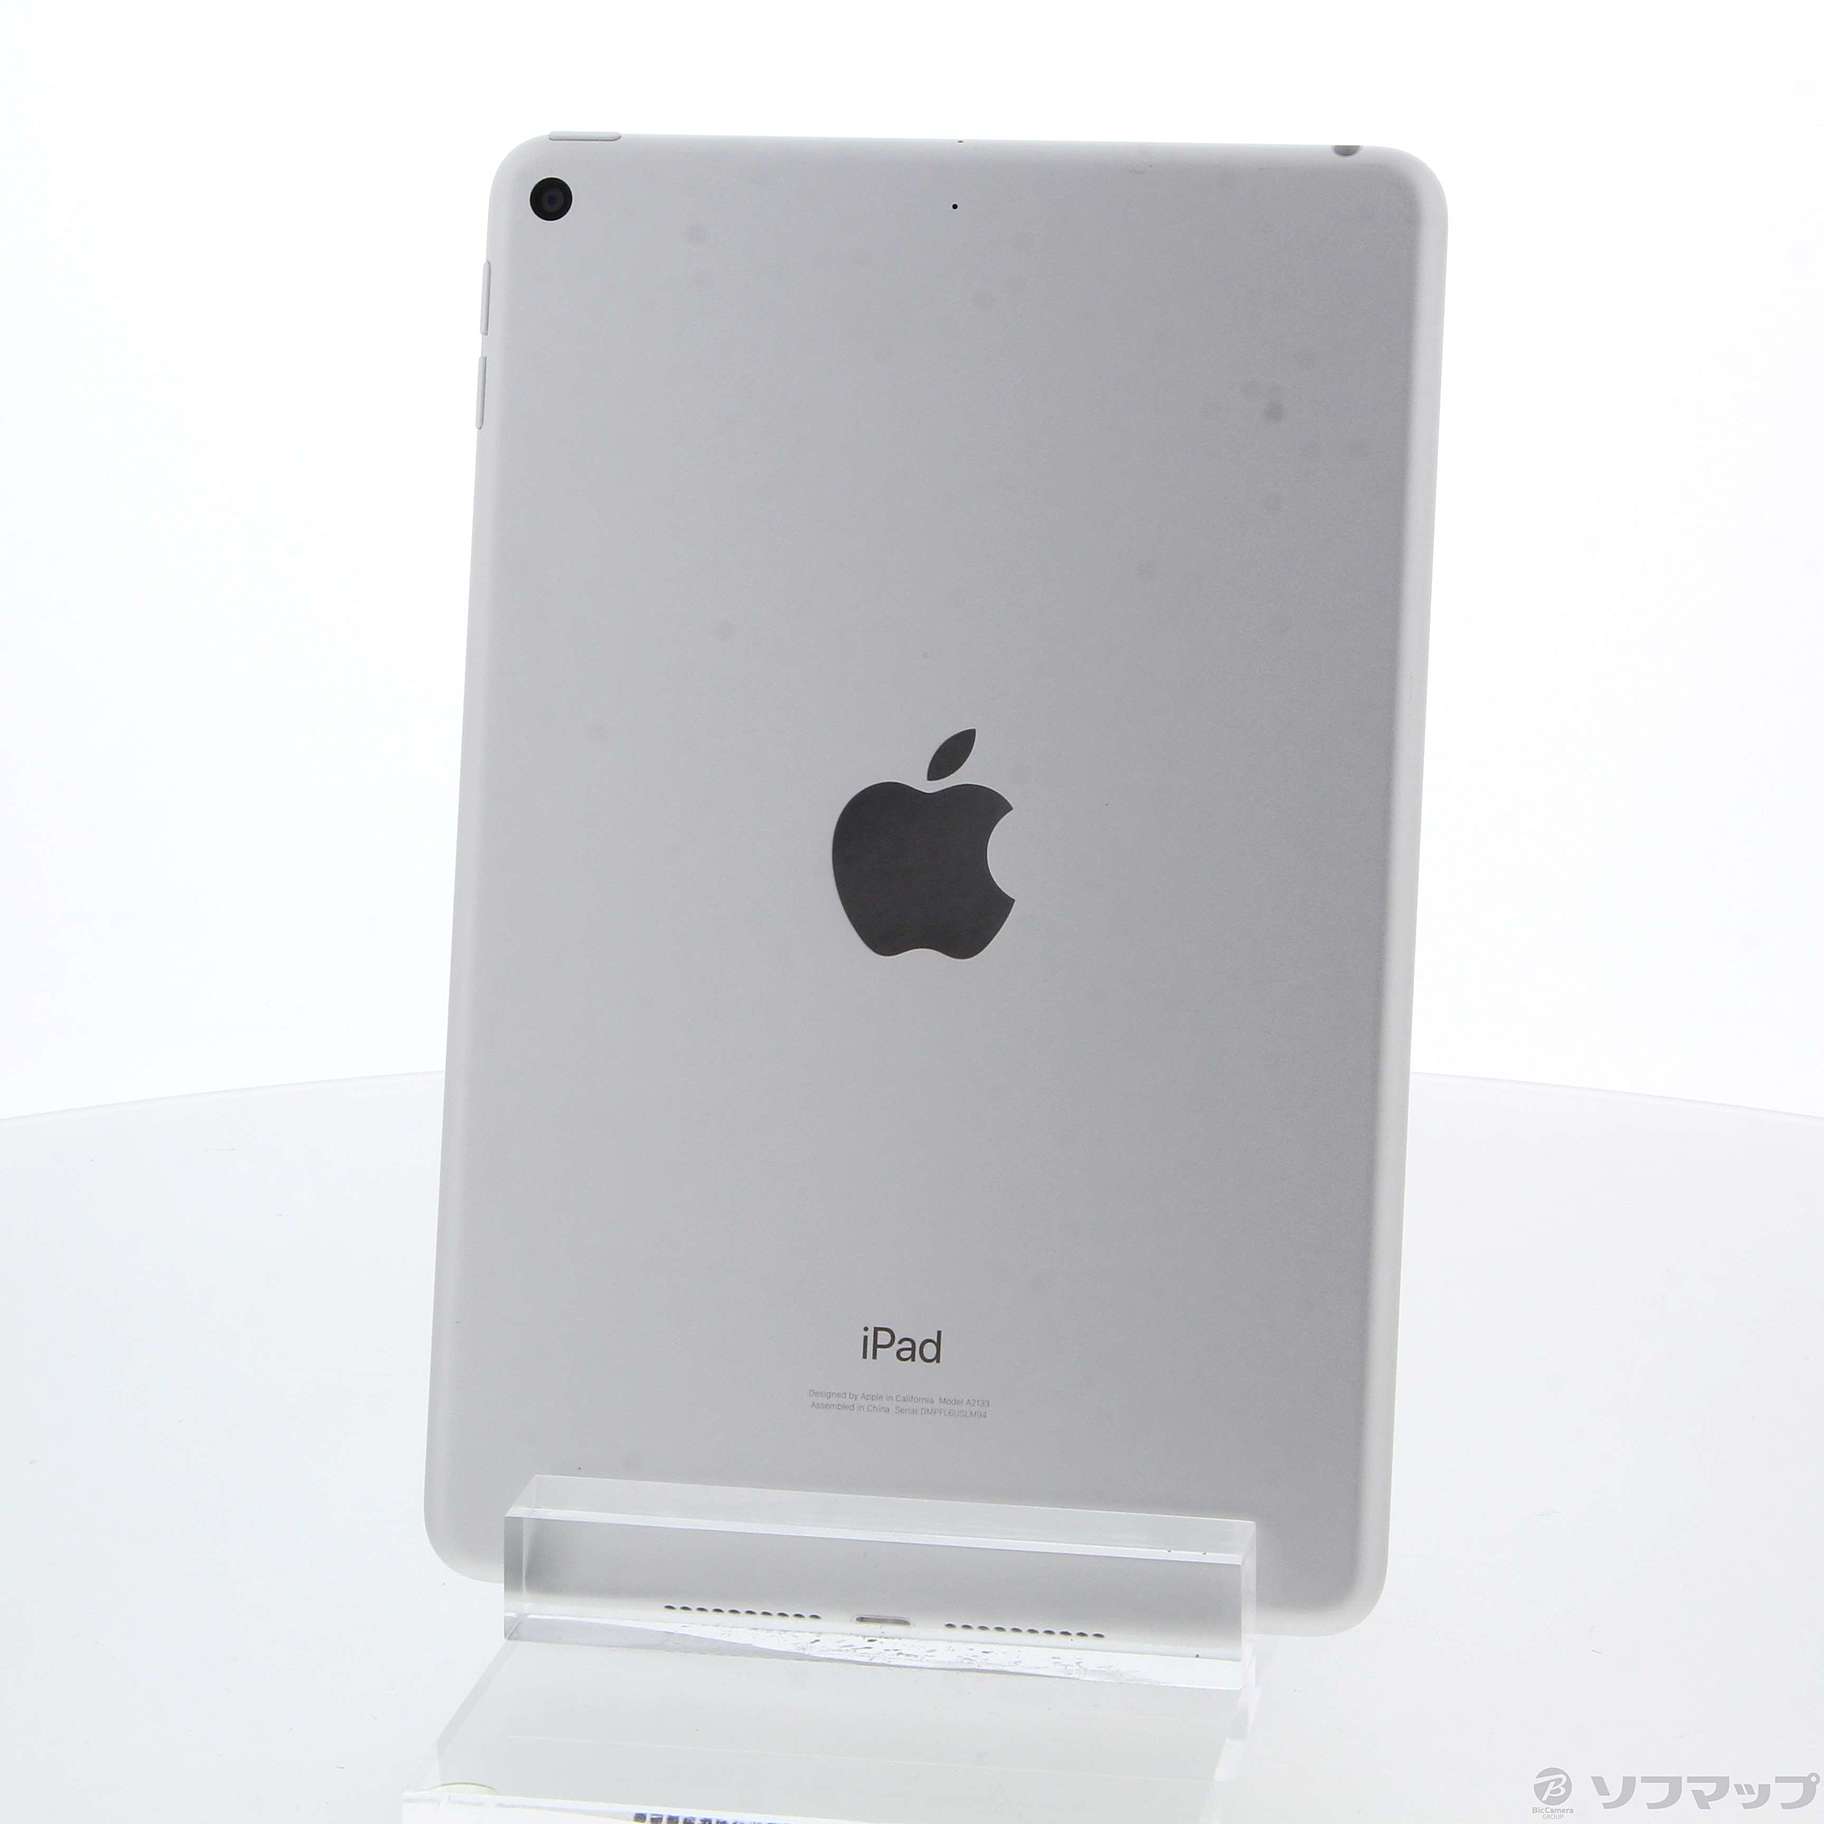 iPad mini 第5世代 64GB Wi-Fiモデル シルバータブレット